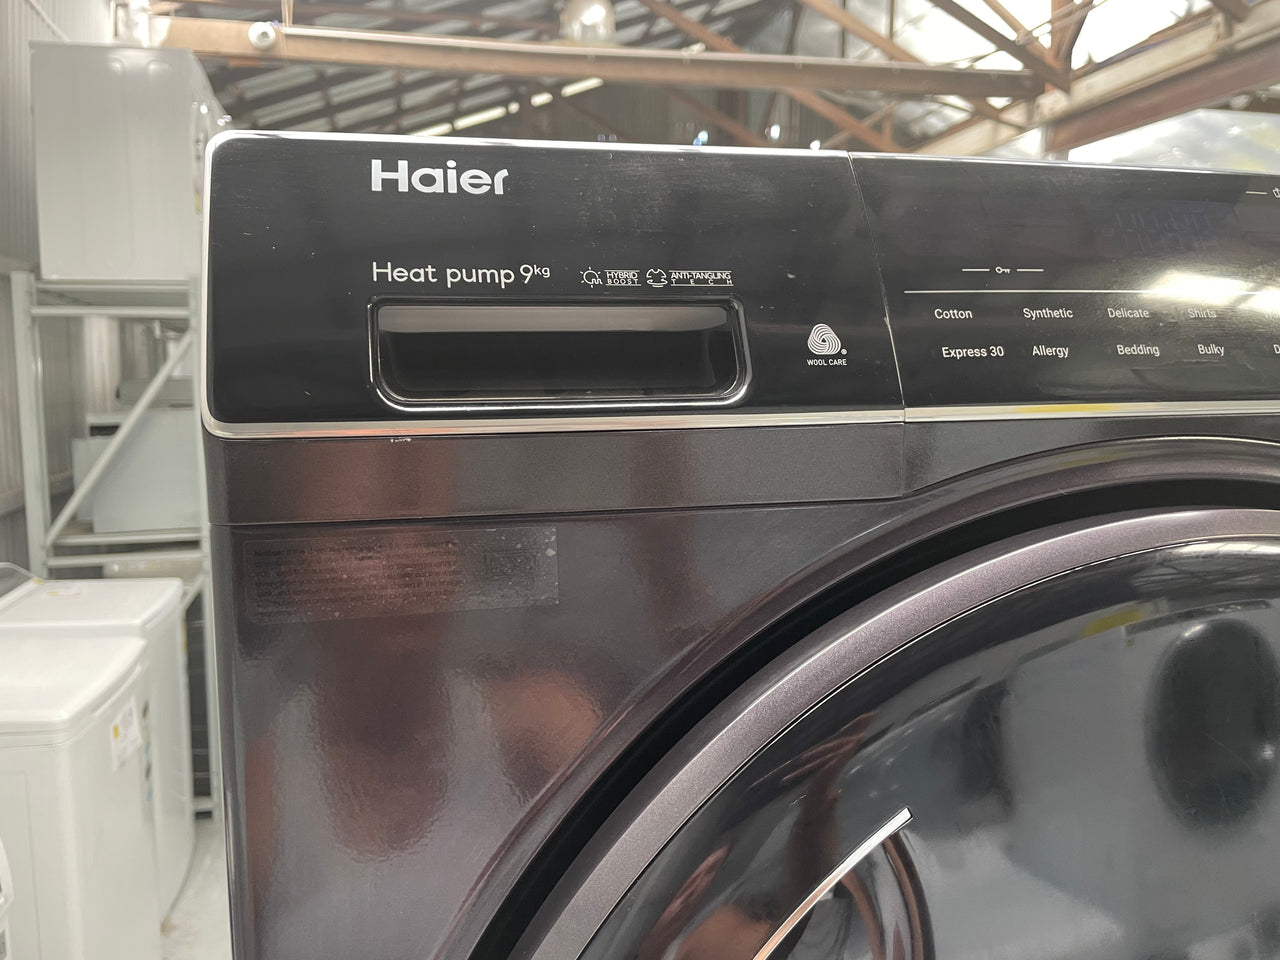 Factory second Haier 9kg Heat Pump Dryer Refresh with Steam- Black HDHP90ANB1 - Second Hand Appliances Geebung